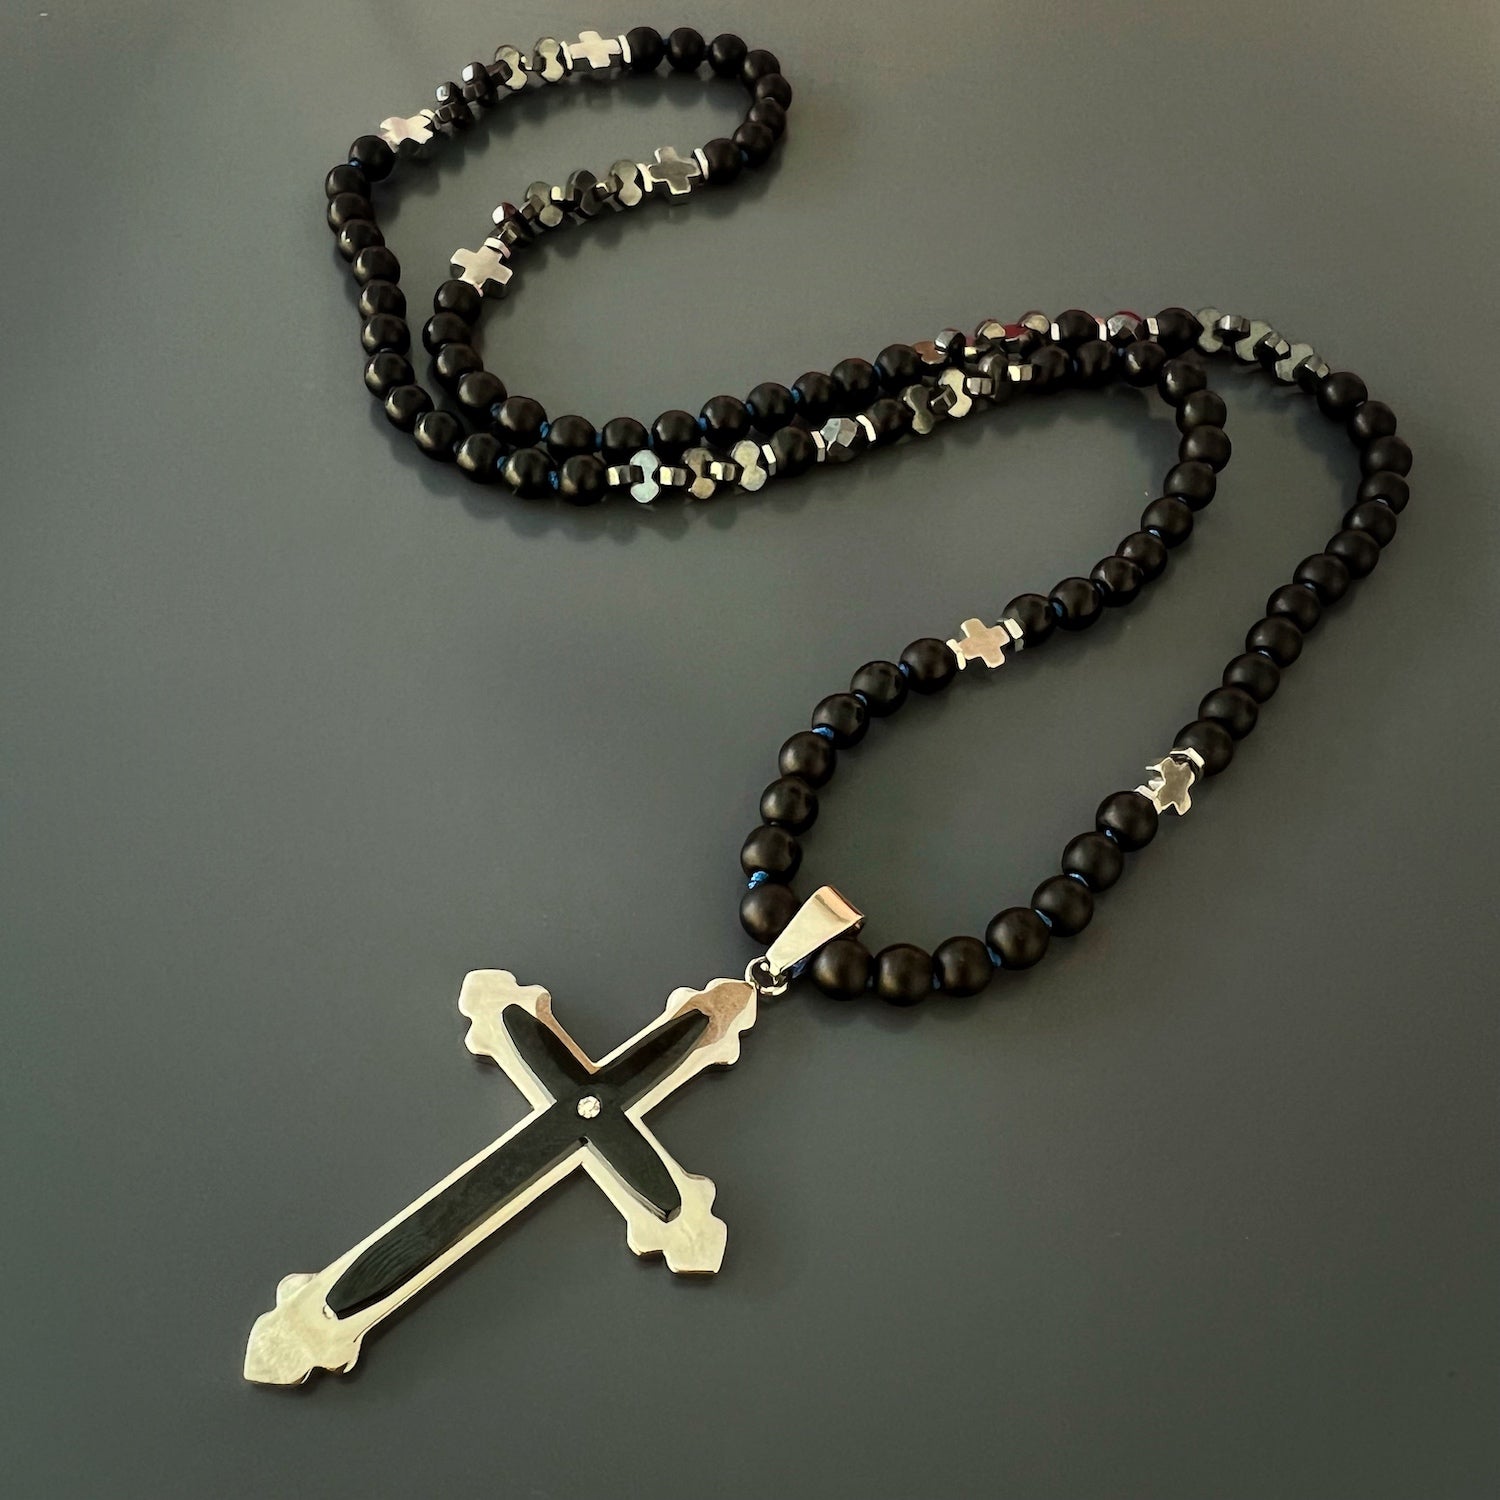 Spiritual Black Onyx Cross Necklace on Neutral Background